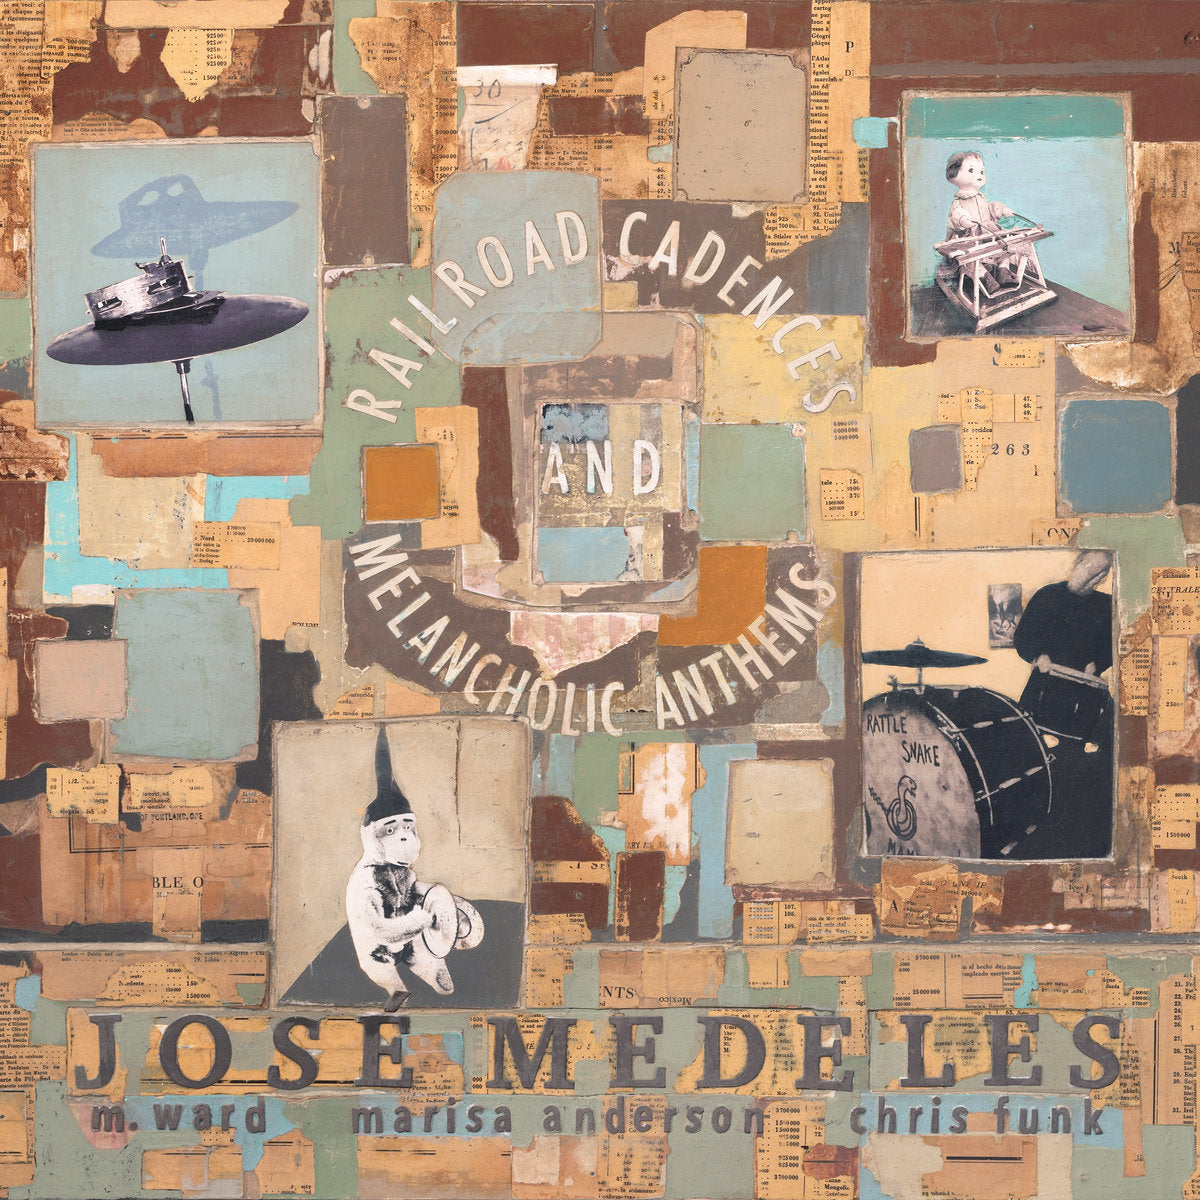 JOSE MEDELES w/ M. WARD, MARISA ANDERSON, AND CHRIS FUNK - Railroad Cadences And Melancholic Anthems - LP - Clear w/ Black Smoke Vinyl